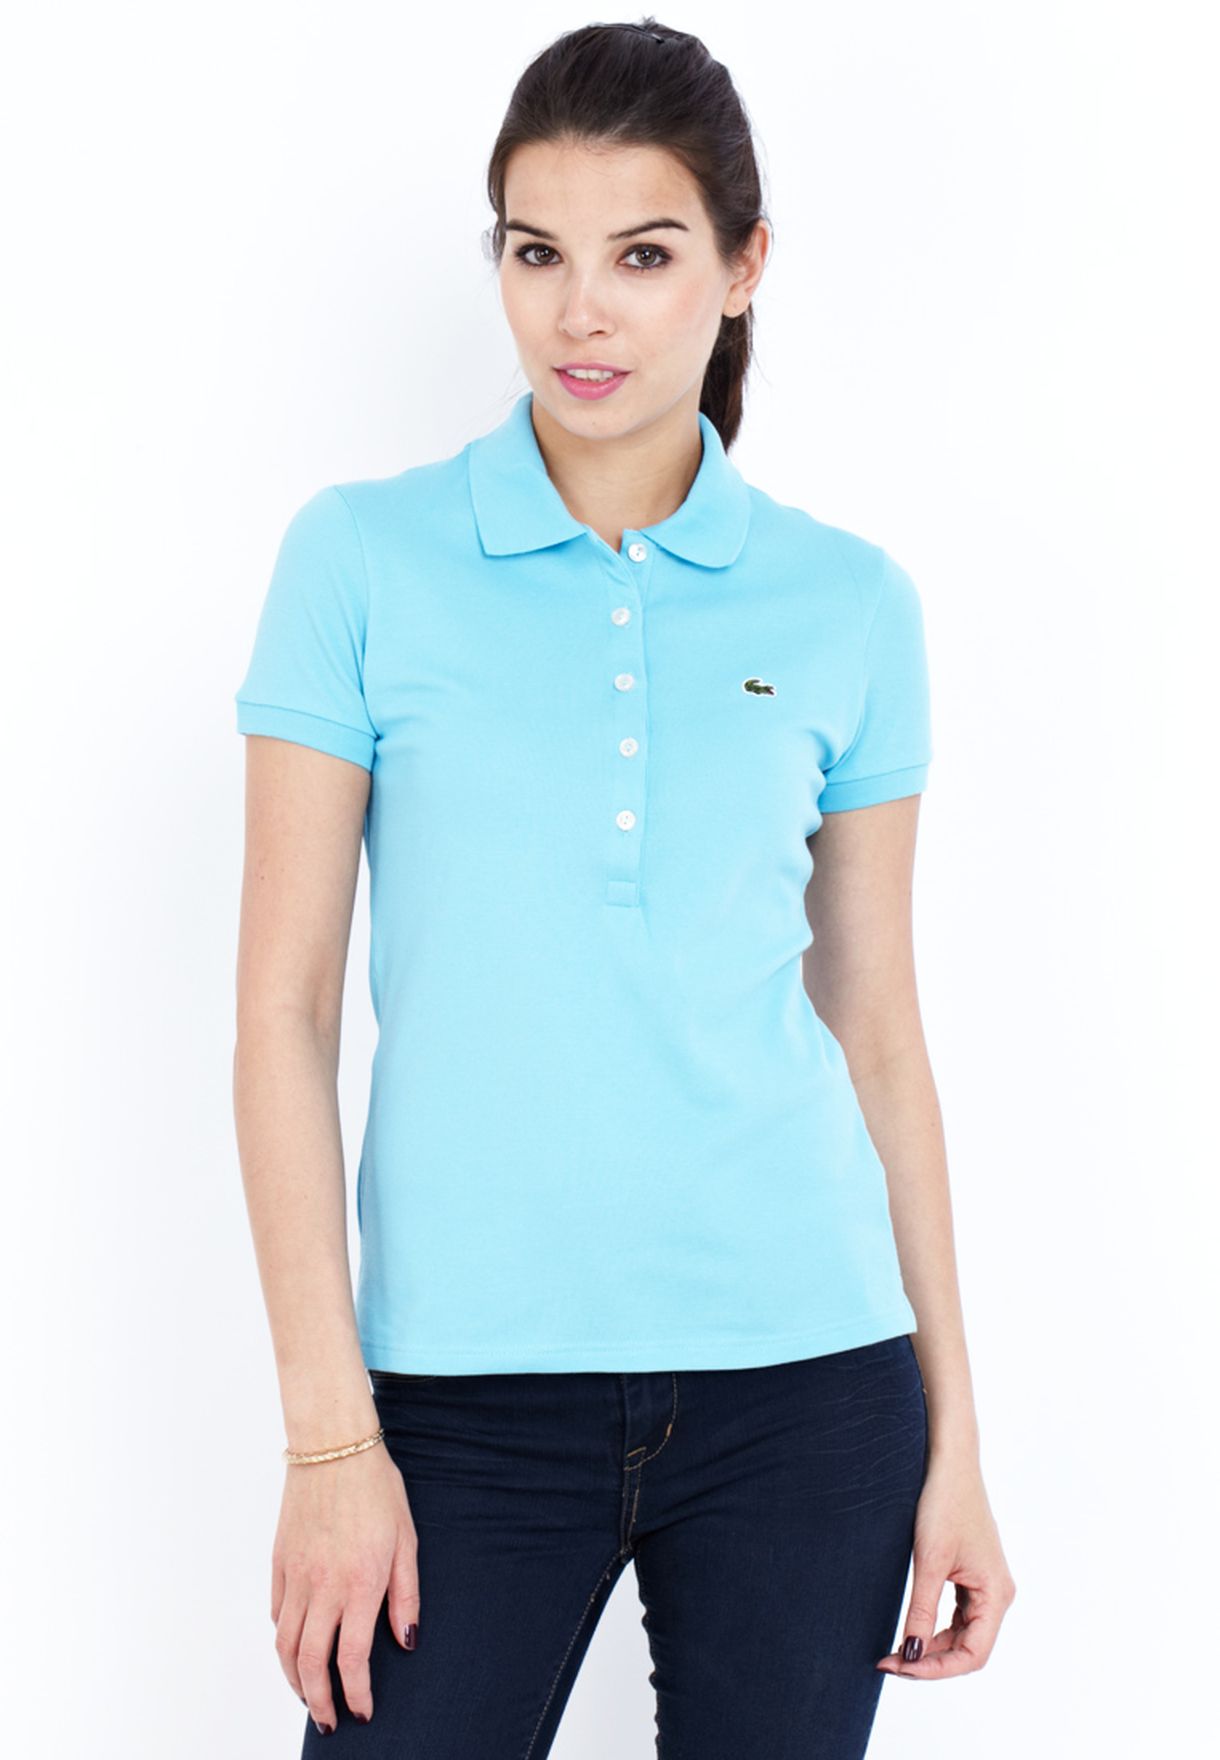 discount 68% Navy Blue 40                  EU Lacoste polo WOMEN FASHION Shirts & T-shirts Polo Elegant 